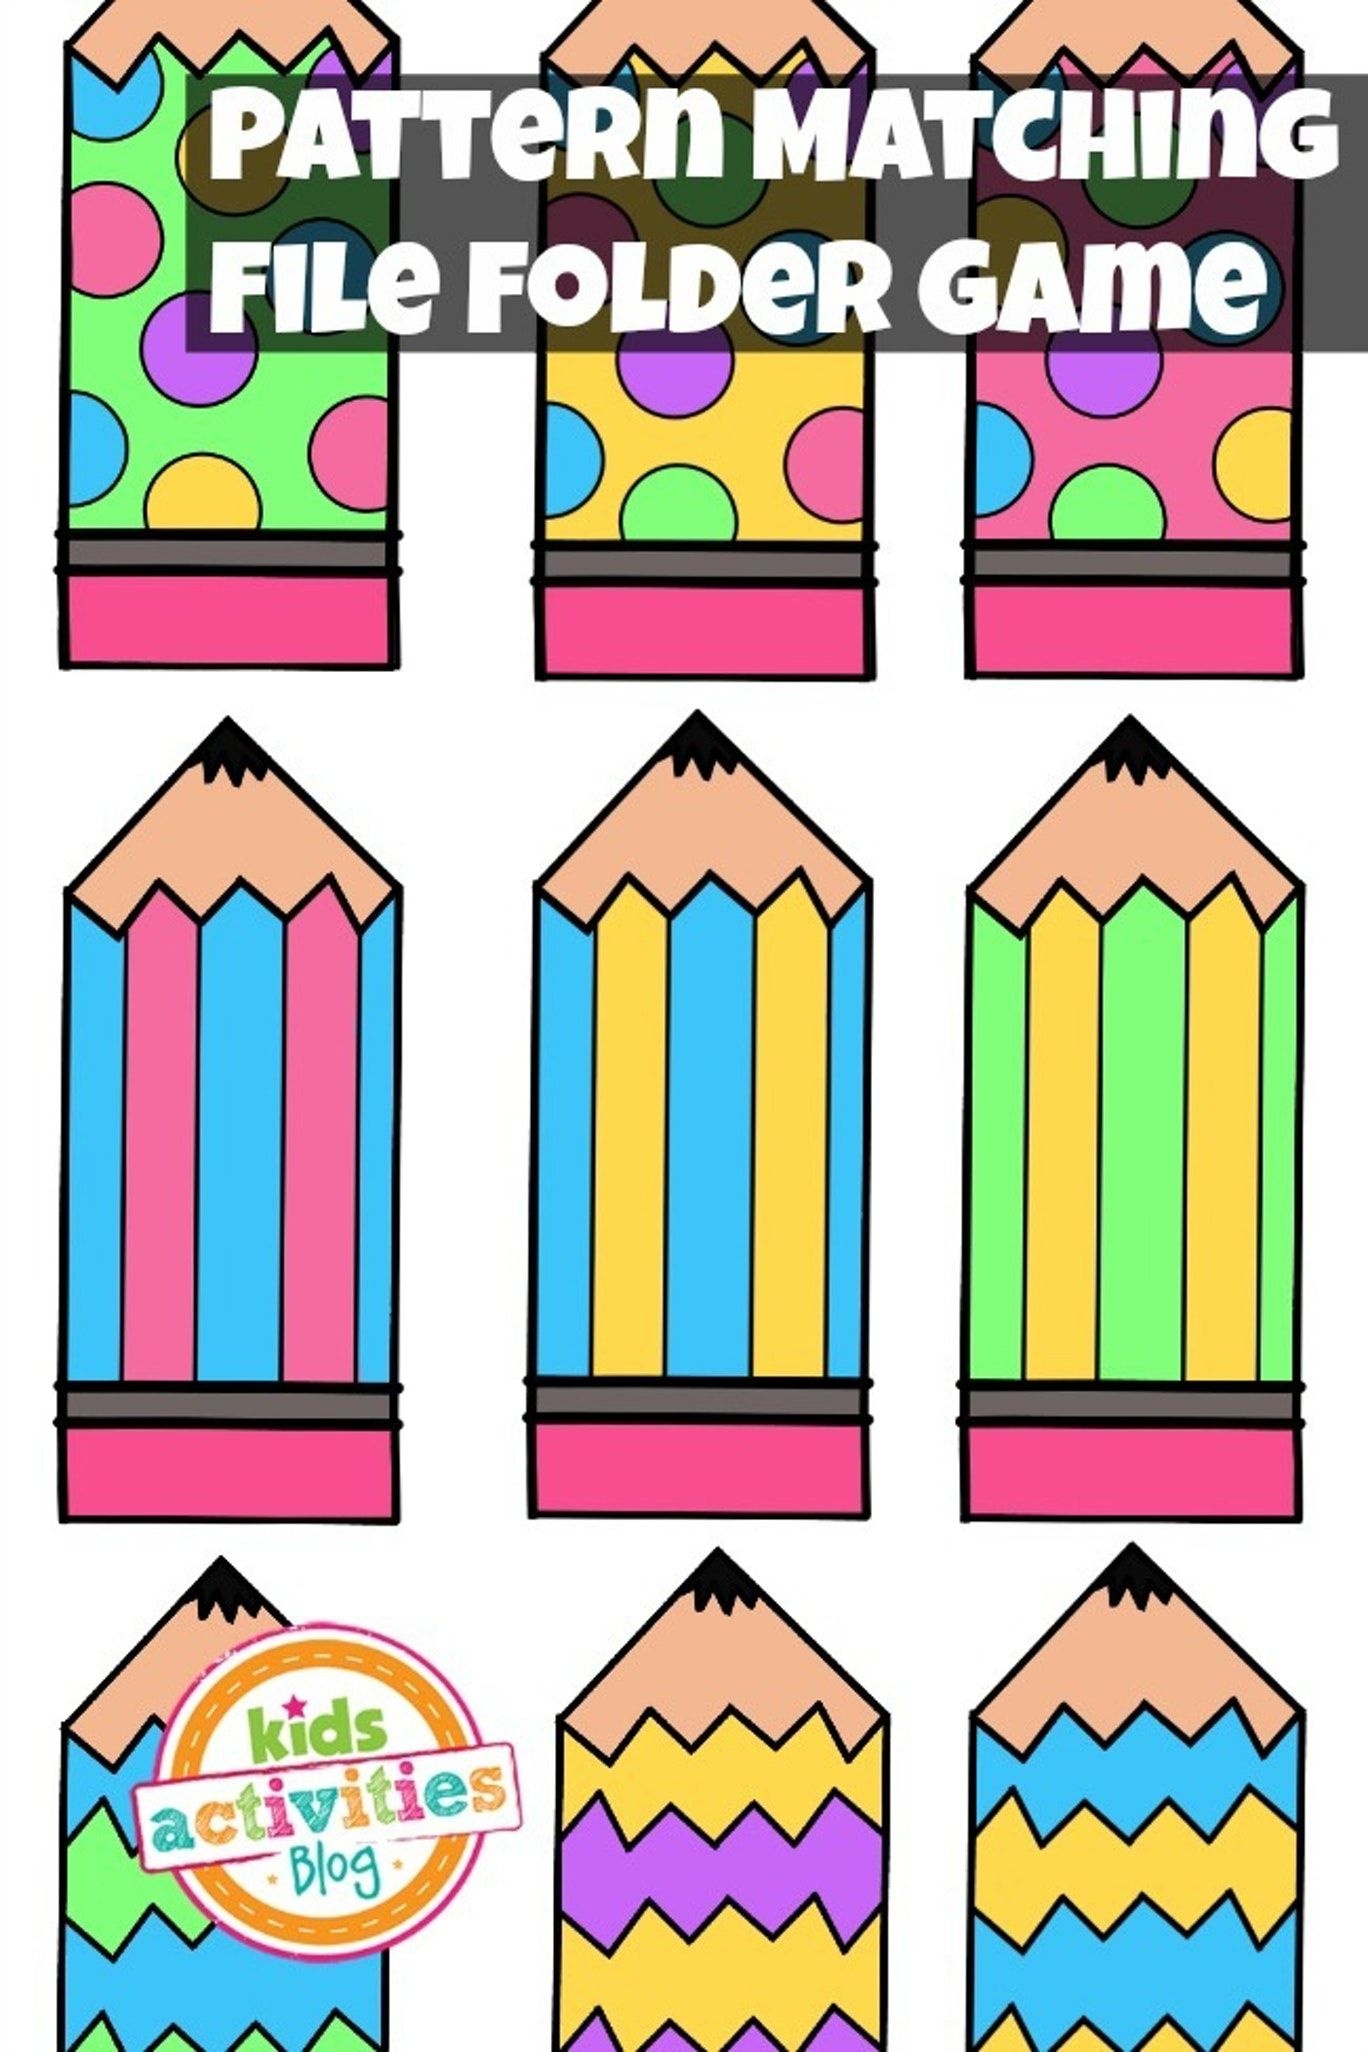 Pattern Matching Free Printable File Folder Game For Preschoolers - File Folder Games For Toddlers Free Printable